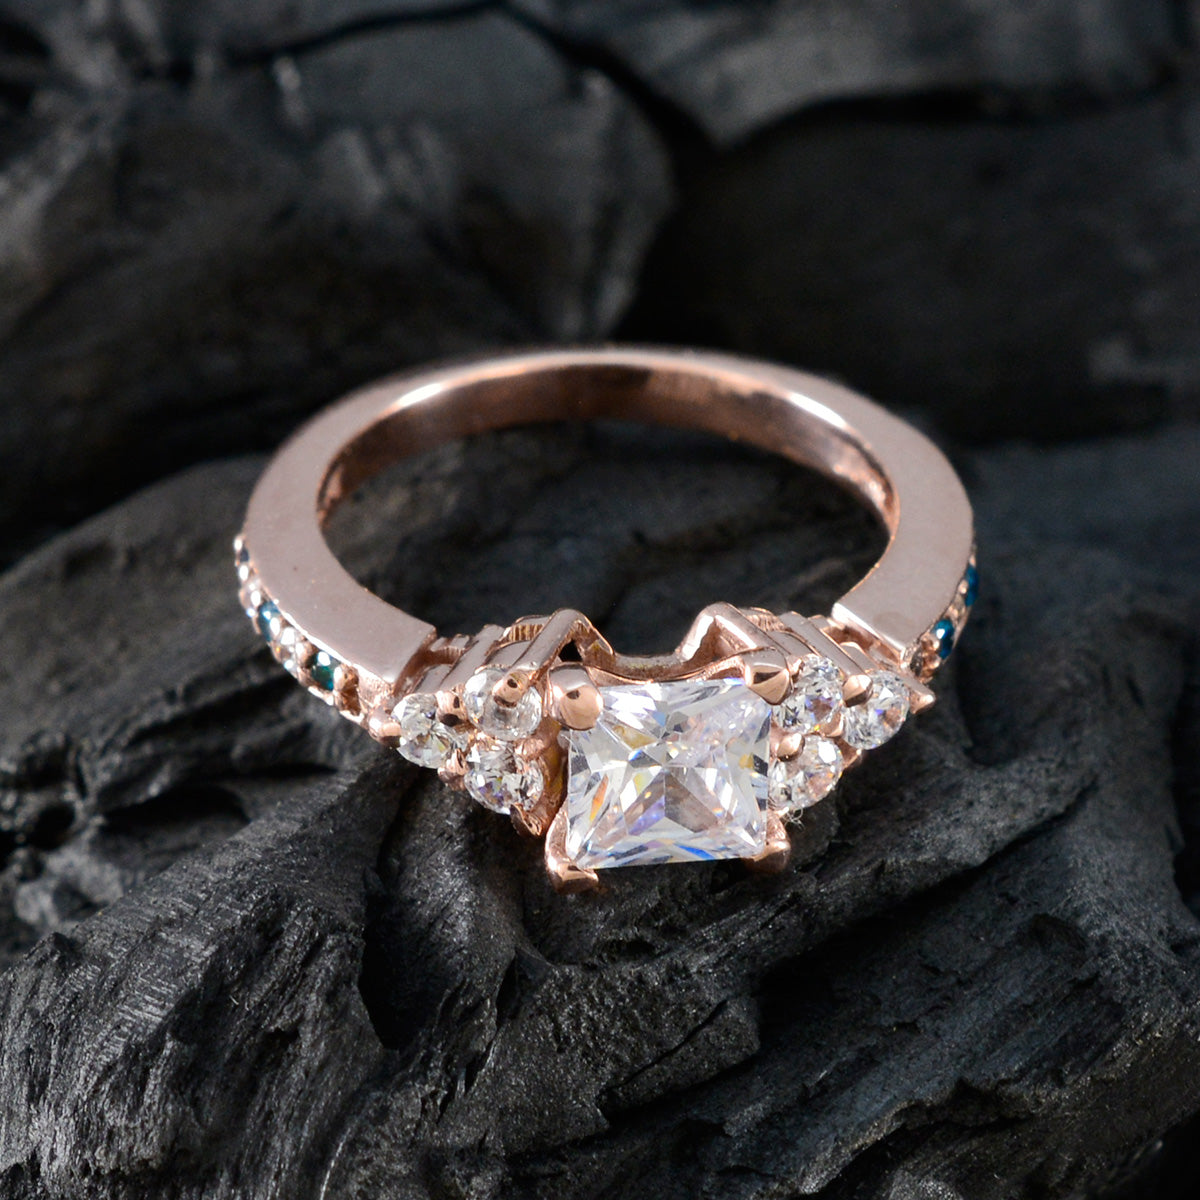 Riyo Bulk zilveren ring met roségouden blauwe topaas CZ-steen vierkante vorm Prong Setting bruidssieraden Pasen-ring